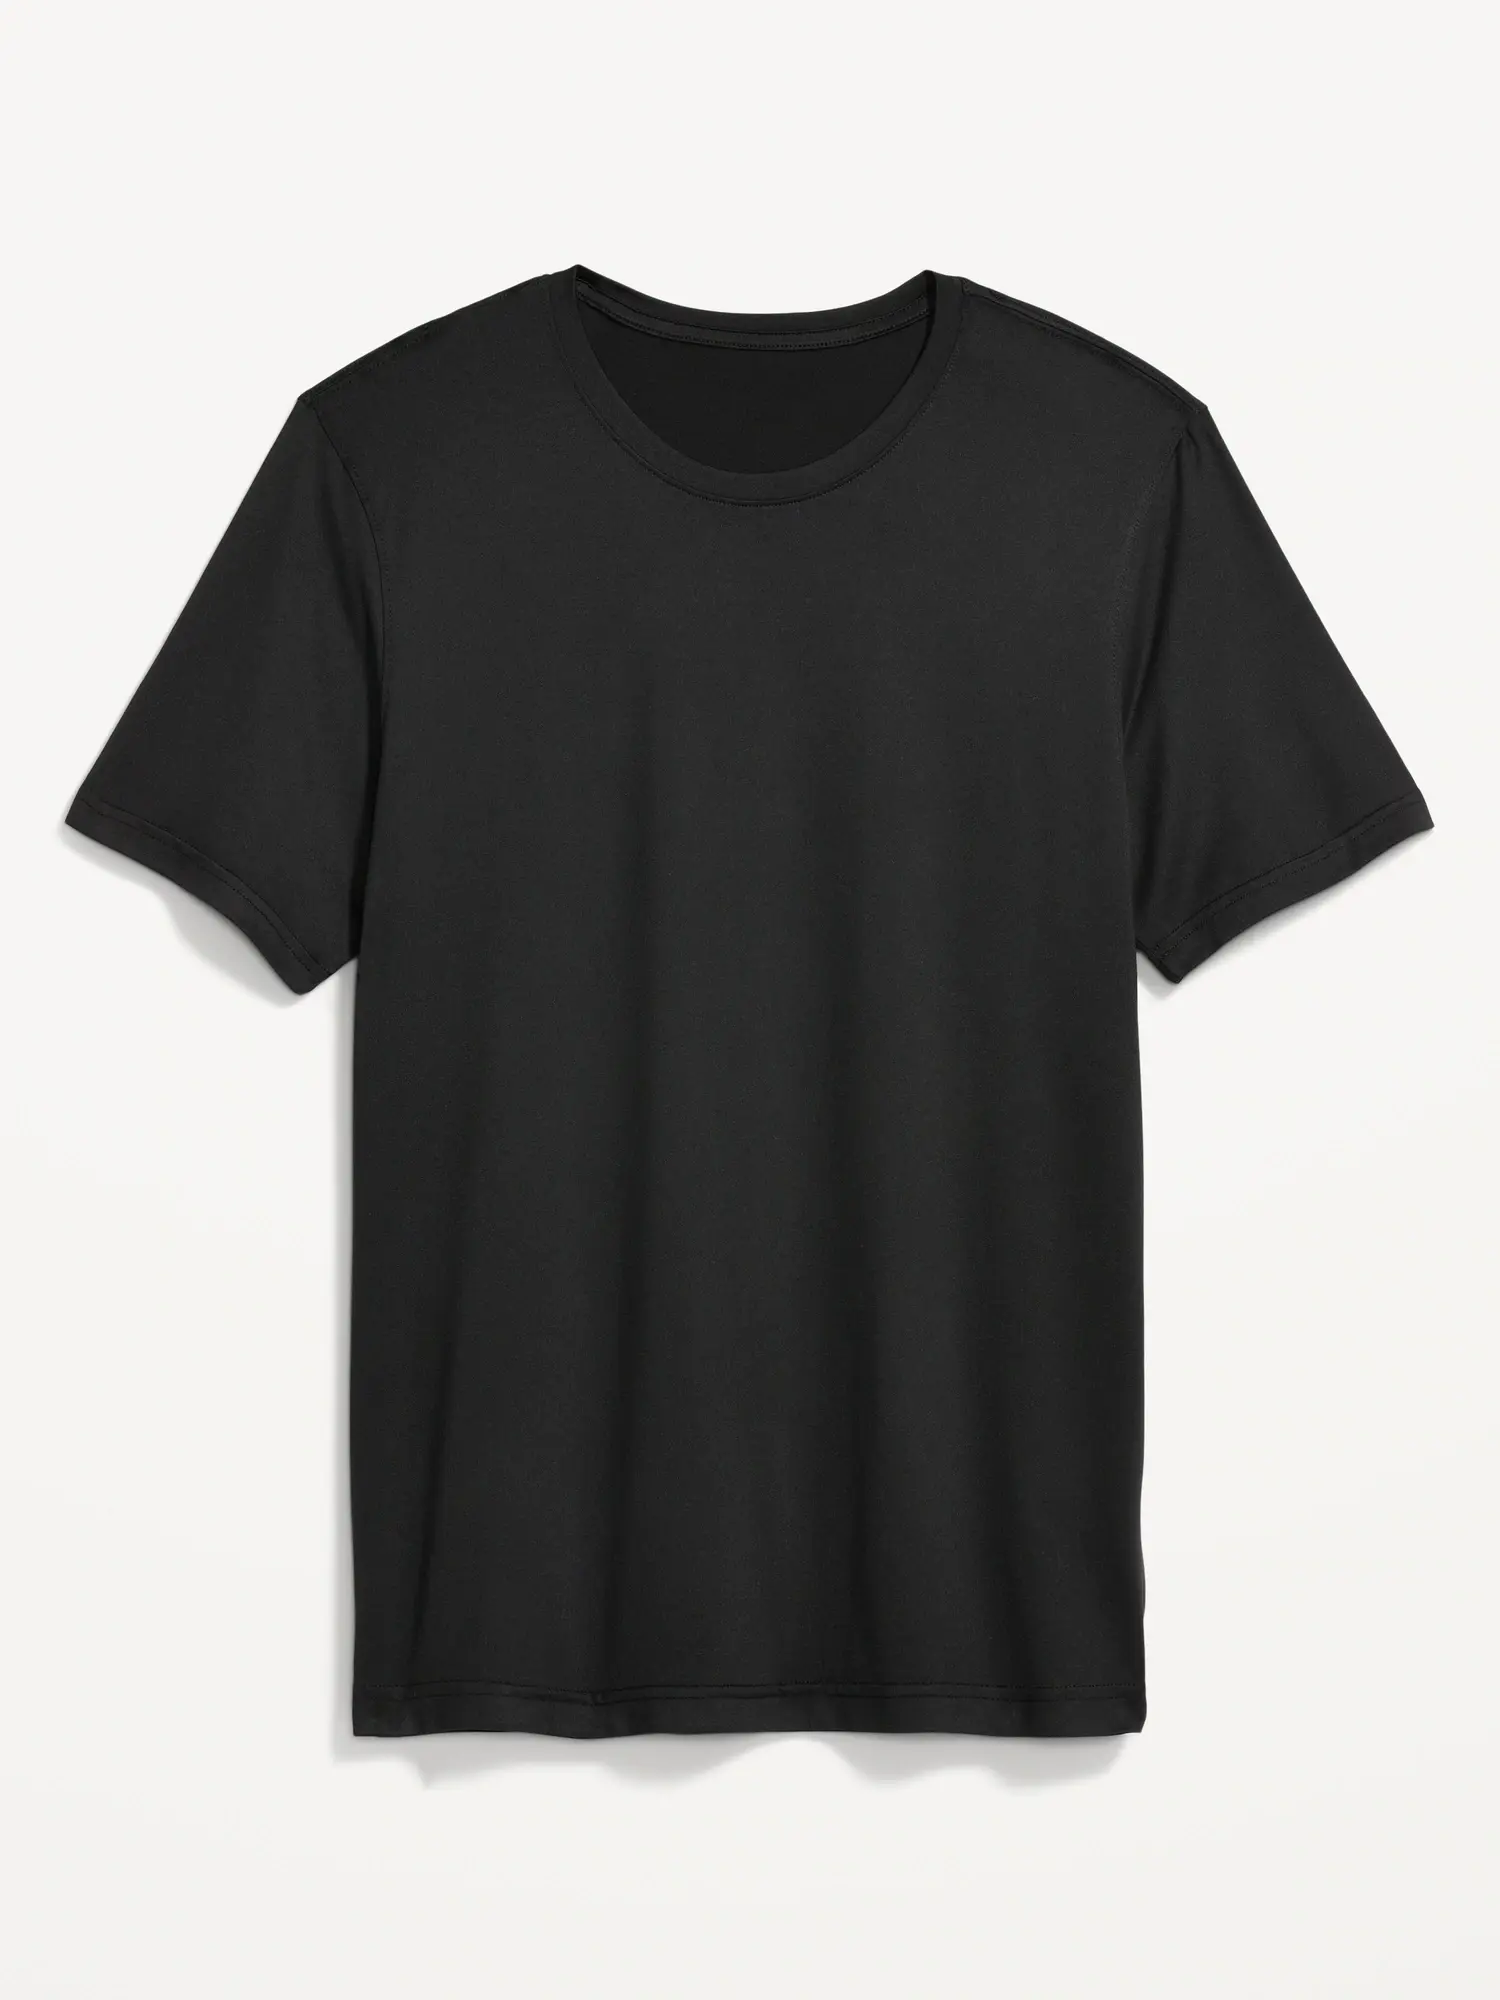 Old Navy Cloud 94 Soft T-Shirt black. 1